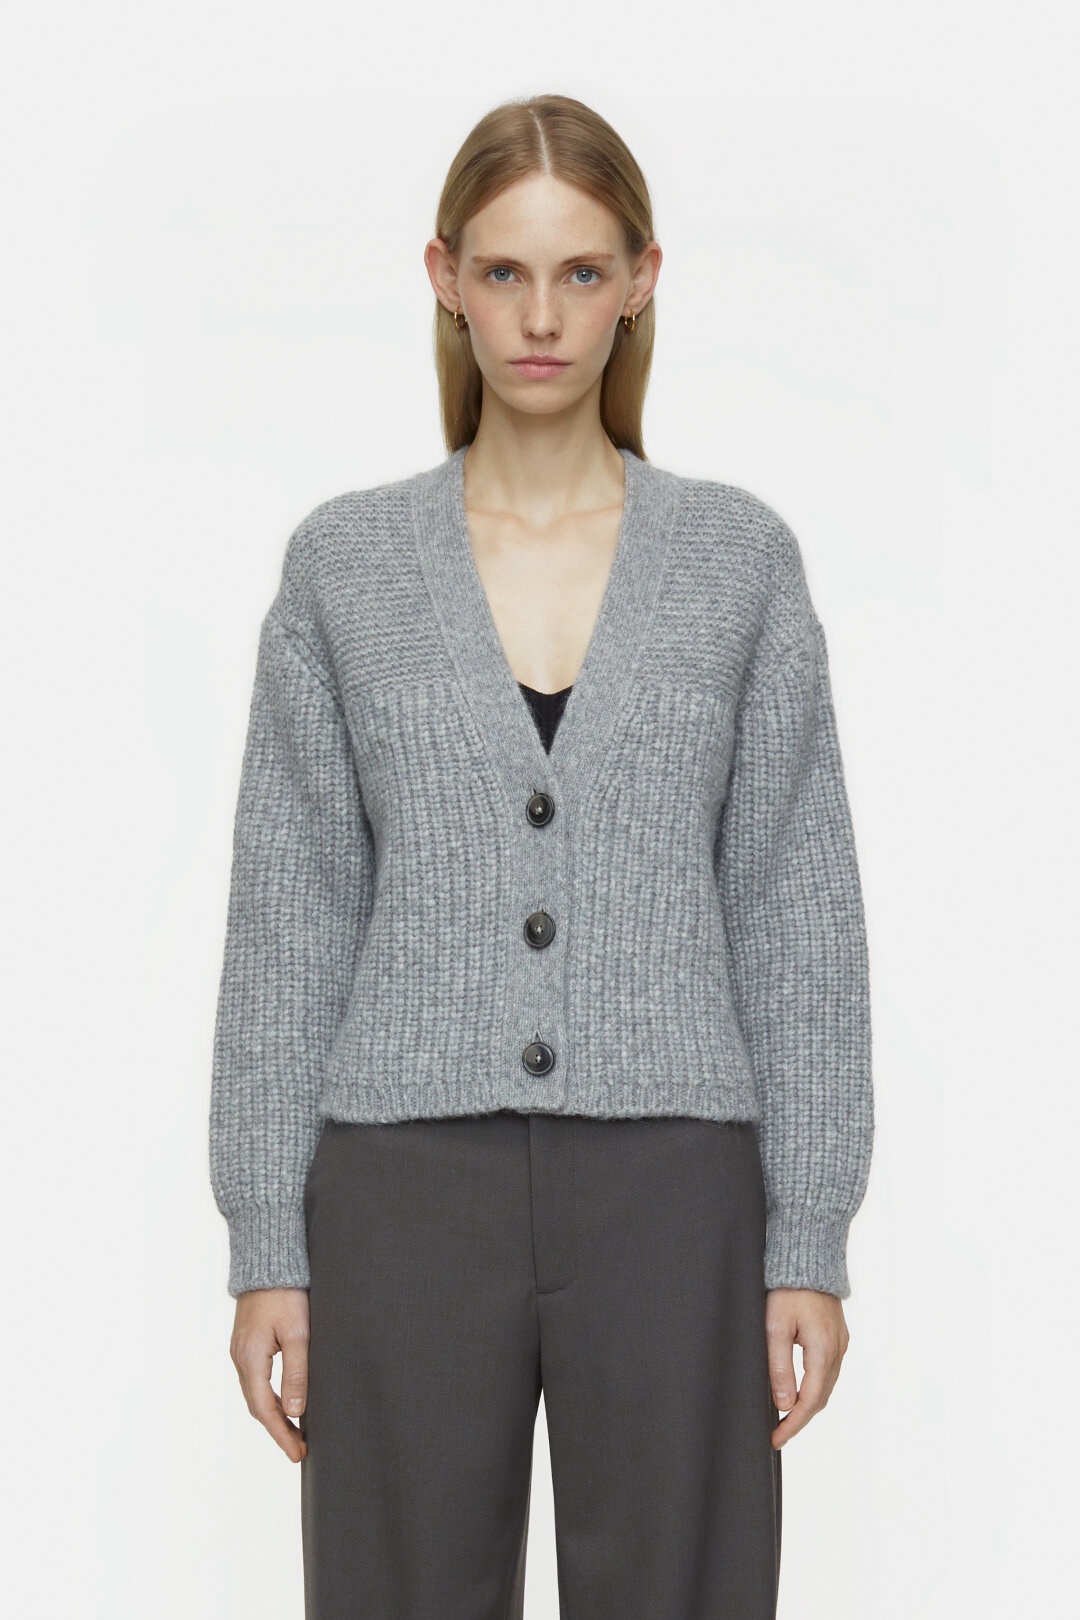 Cardigan heavy knit in light grey, CLOSED